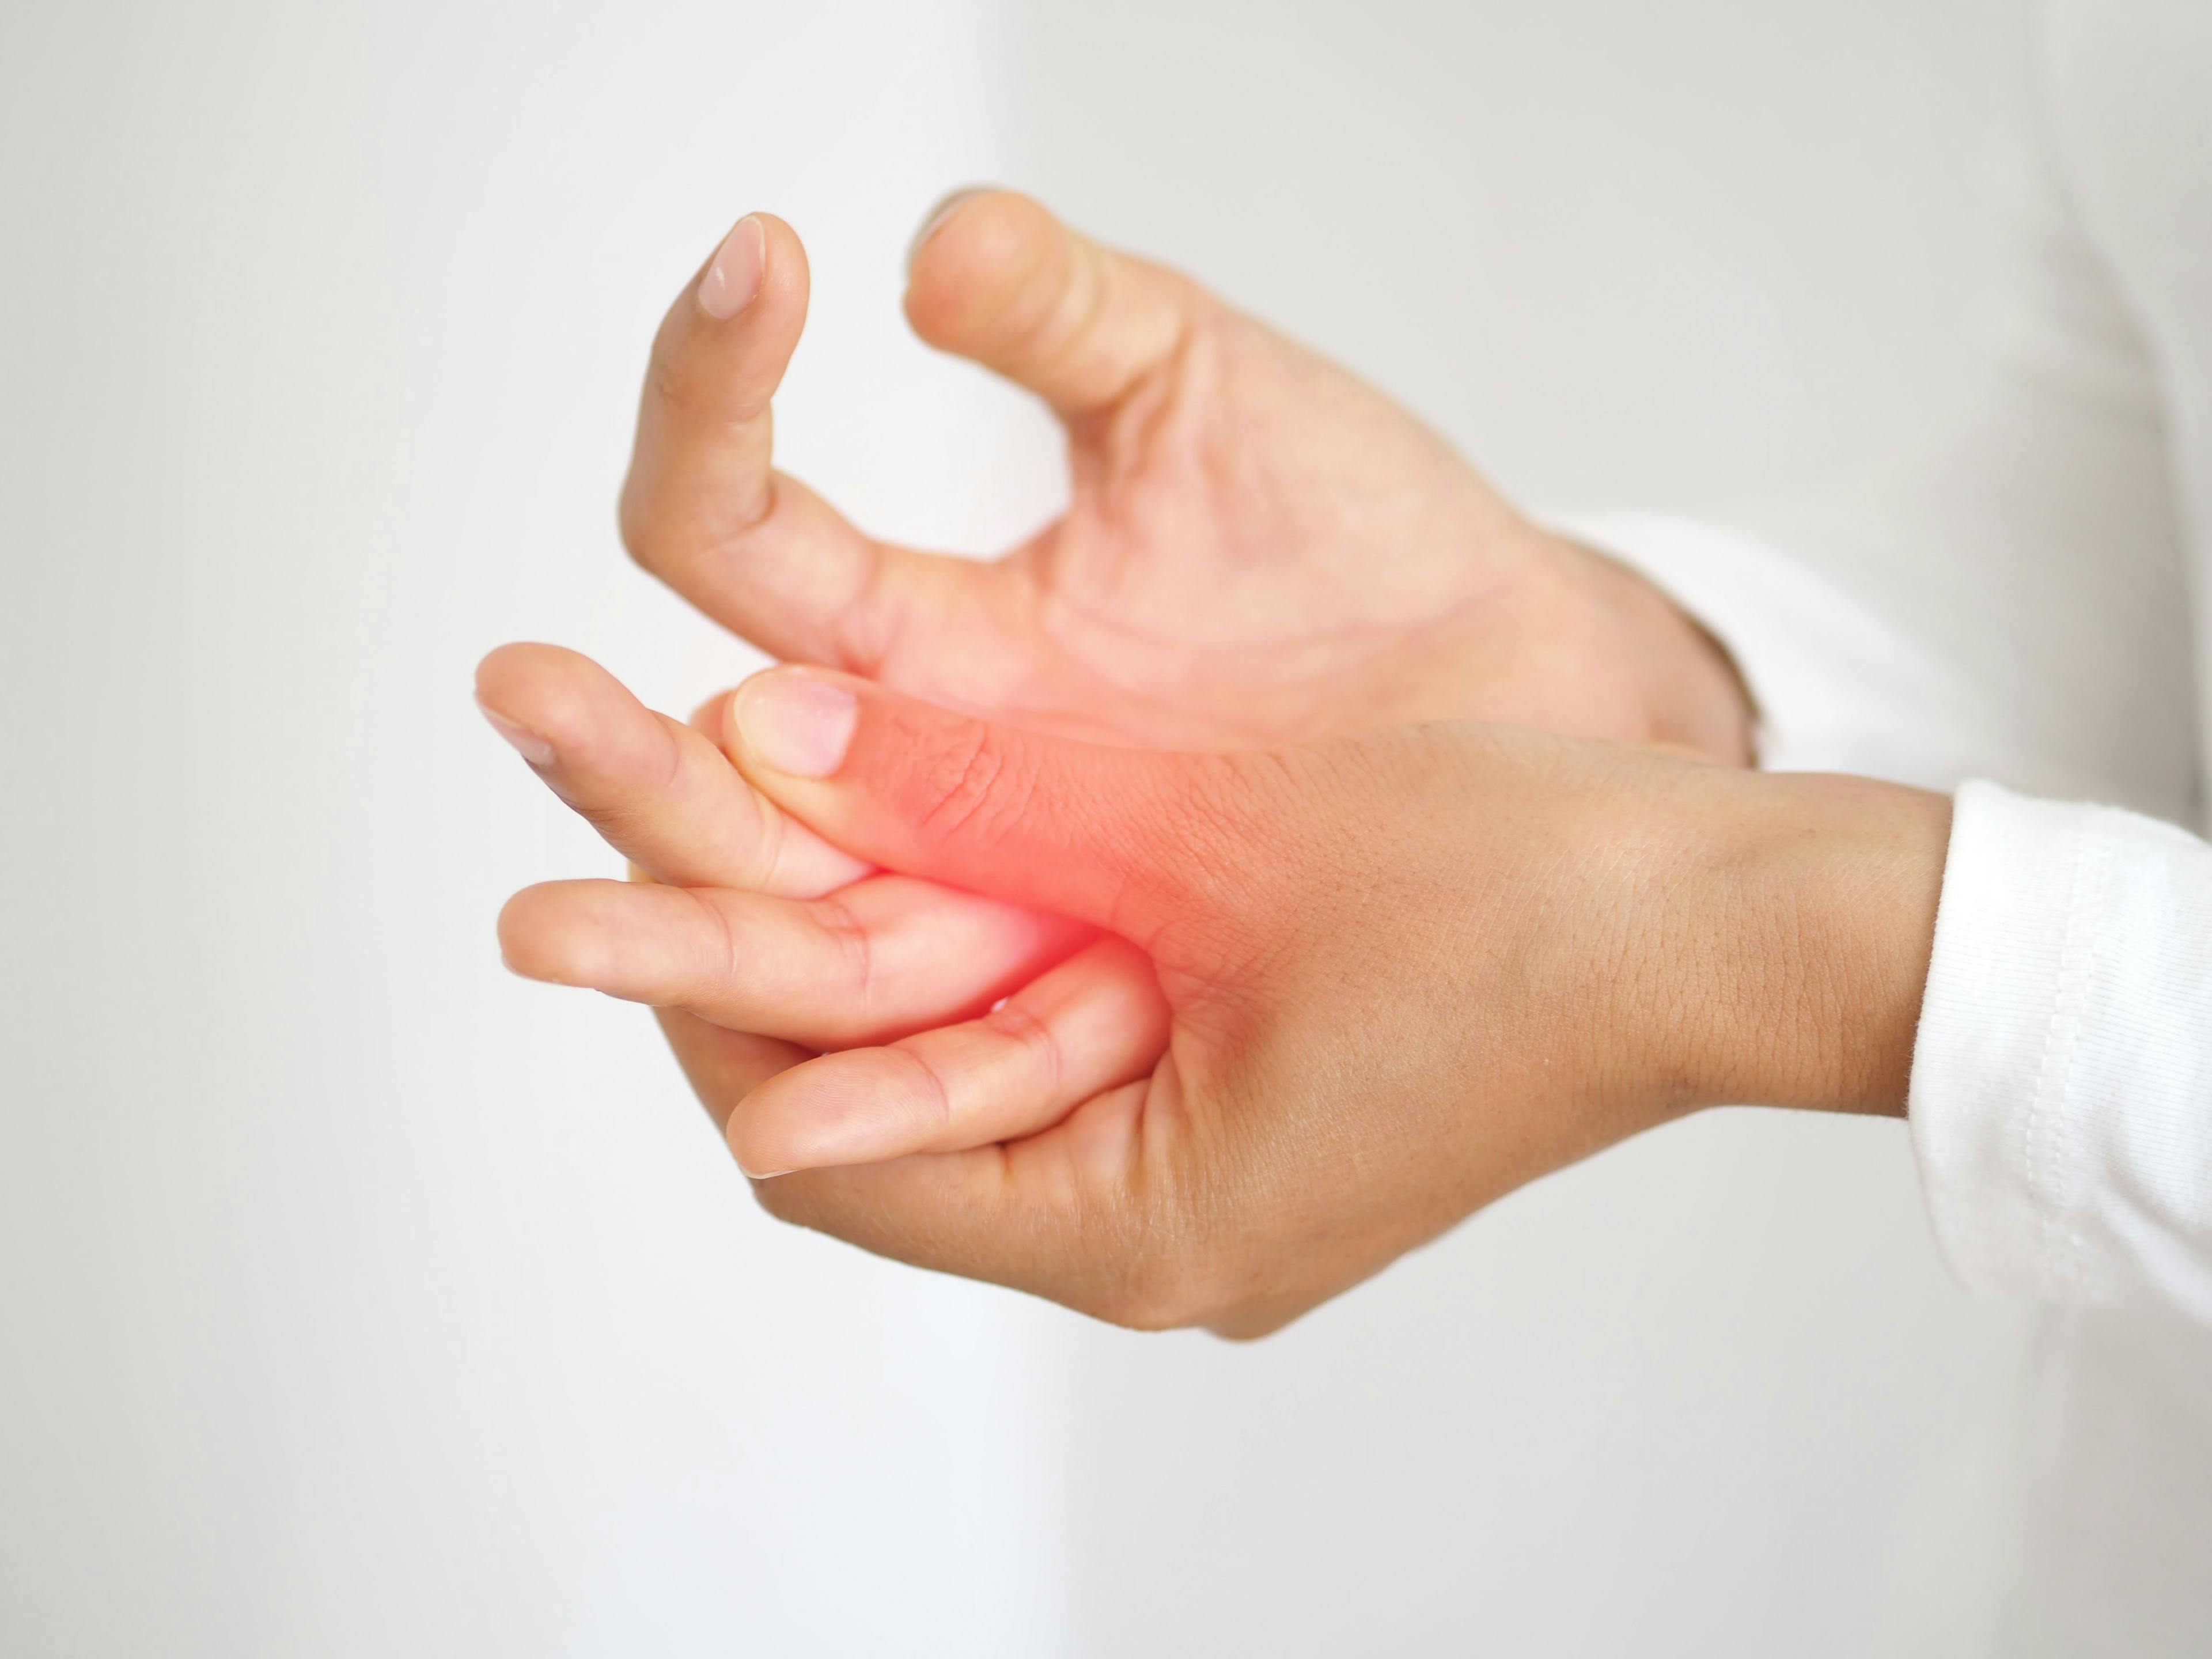 Apremilast Use May Delay Initiation of Biologics in Psoriatic Arthritis